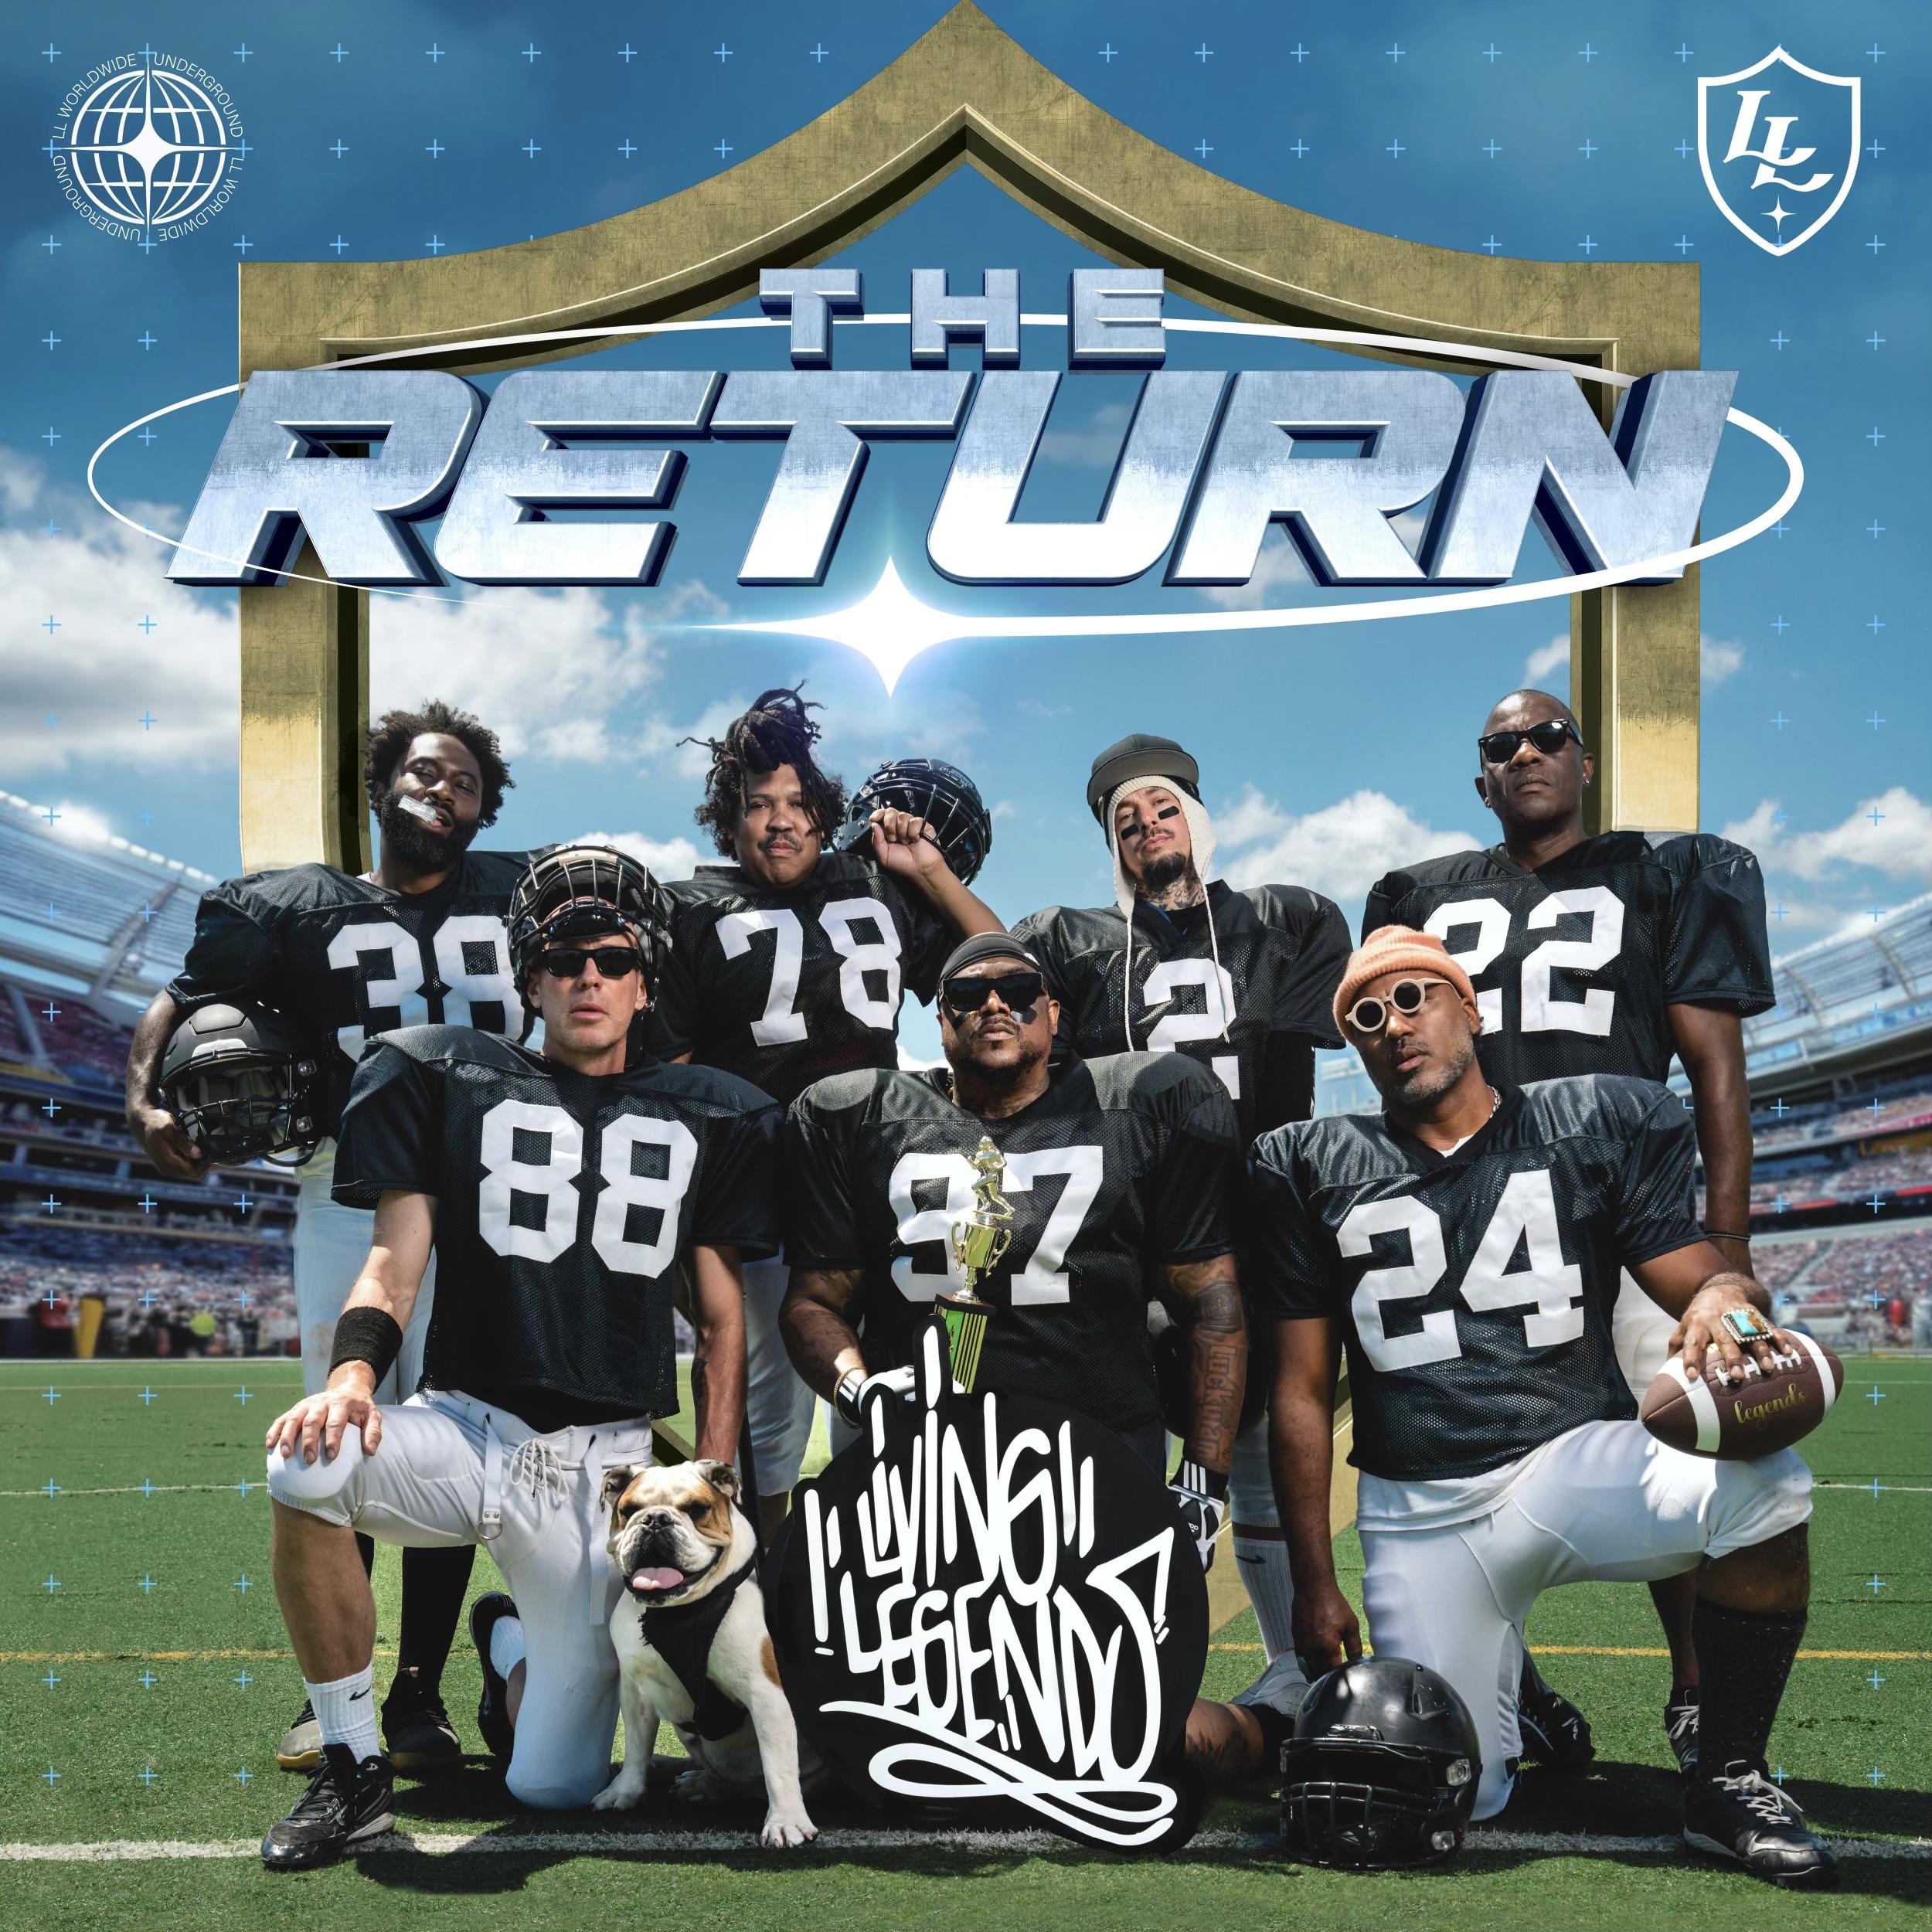 Постер альбома The Return